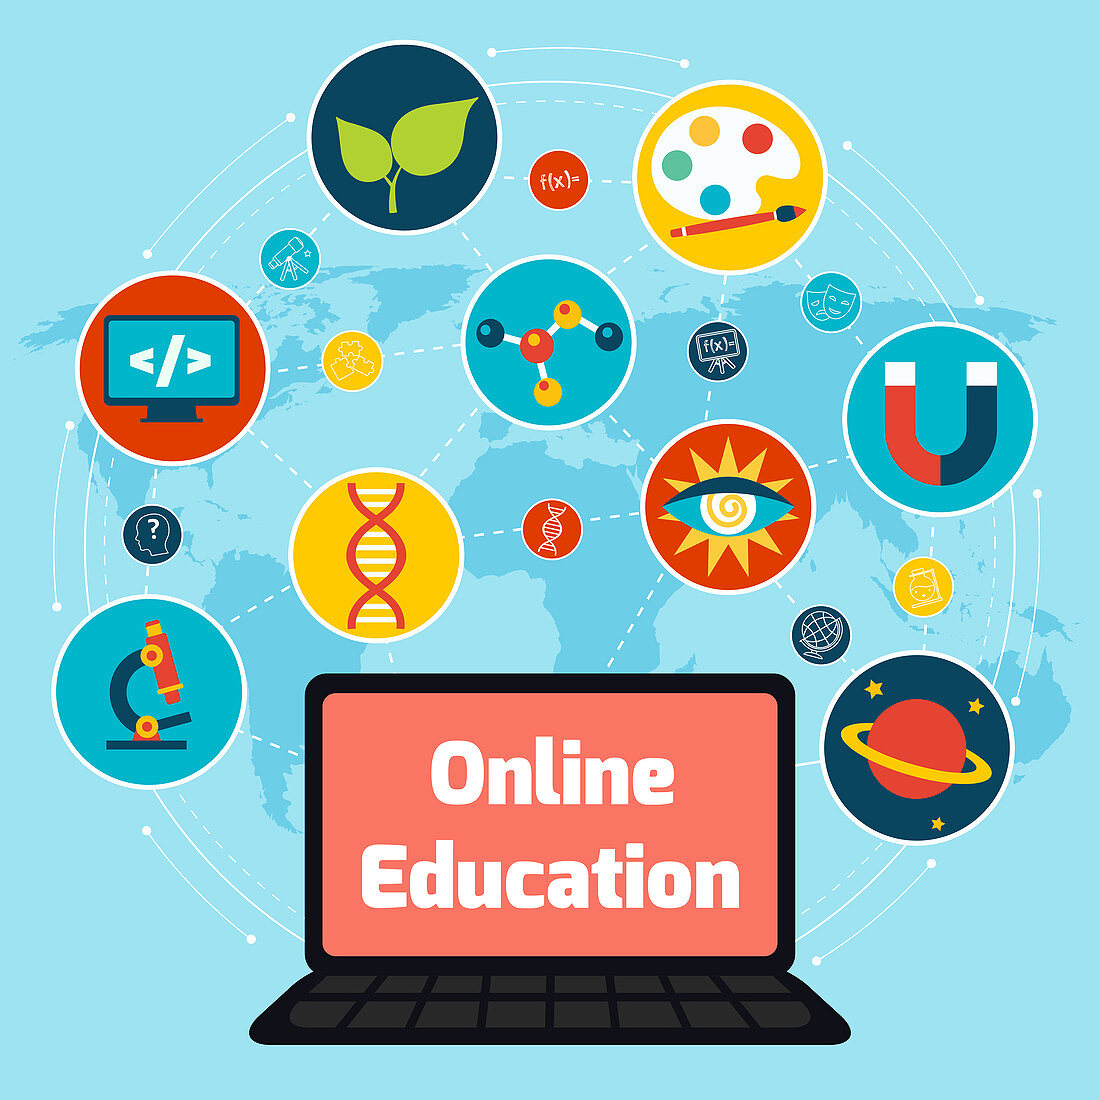 Online education, illustration